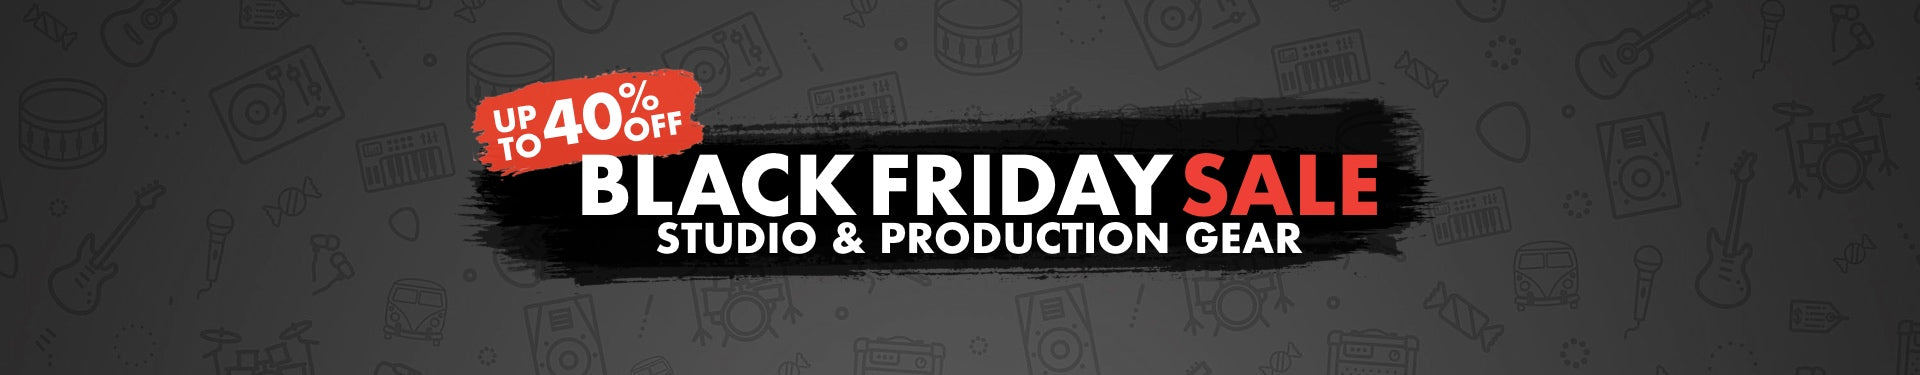 Black Friday Studio & Production Gear